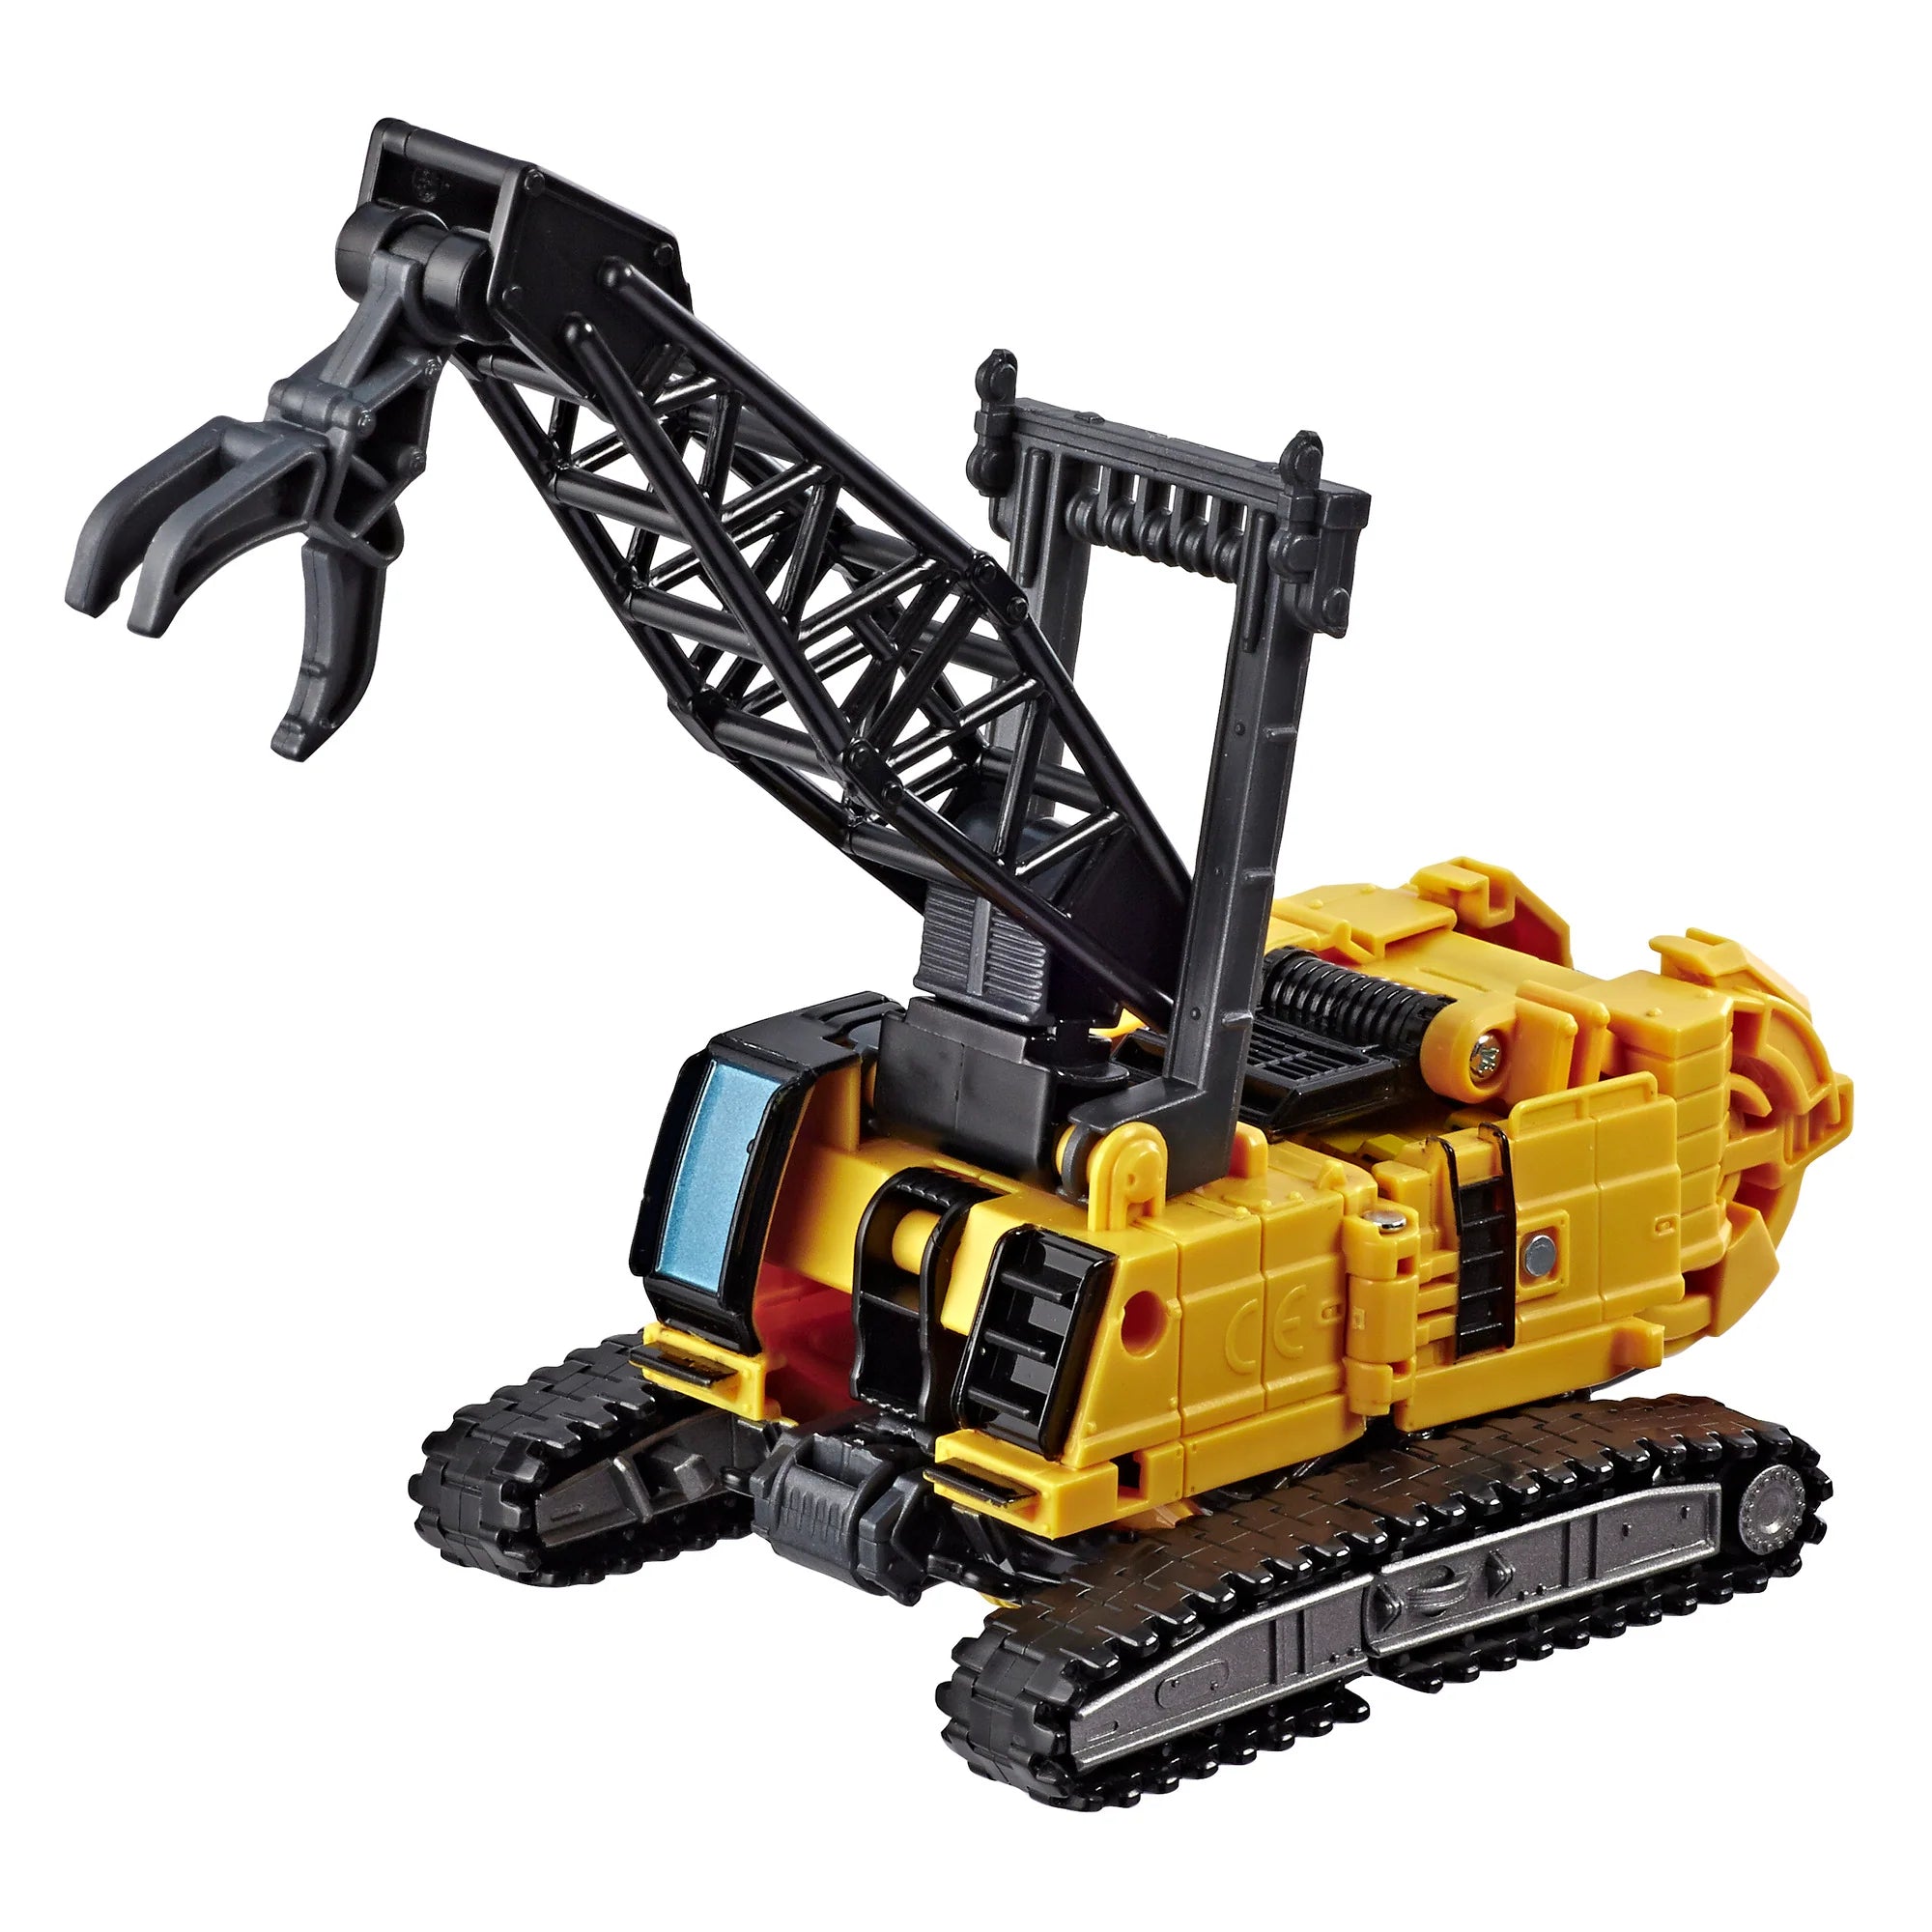 Transformers Generations Studio Series #47 Deluxe Constructicon Hightower Action Figure